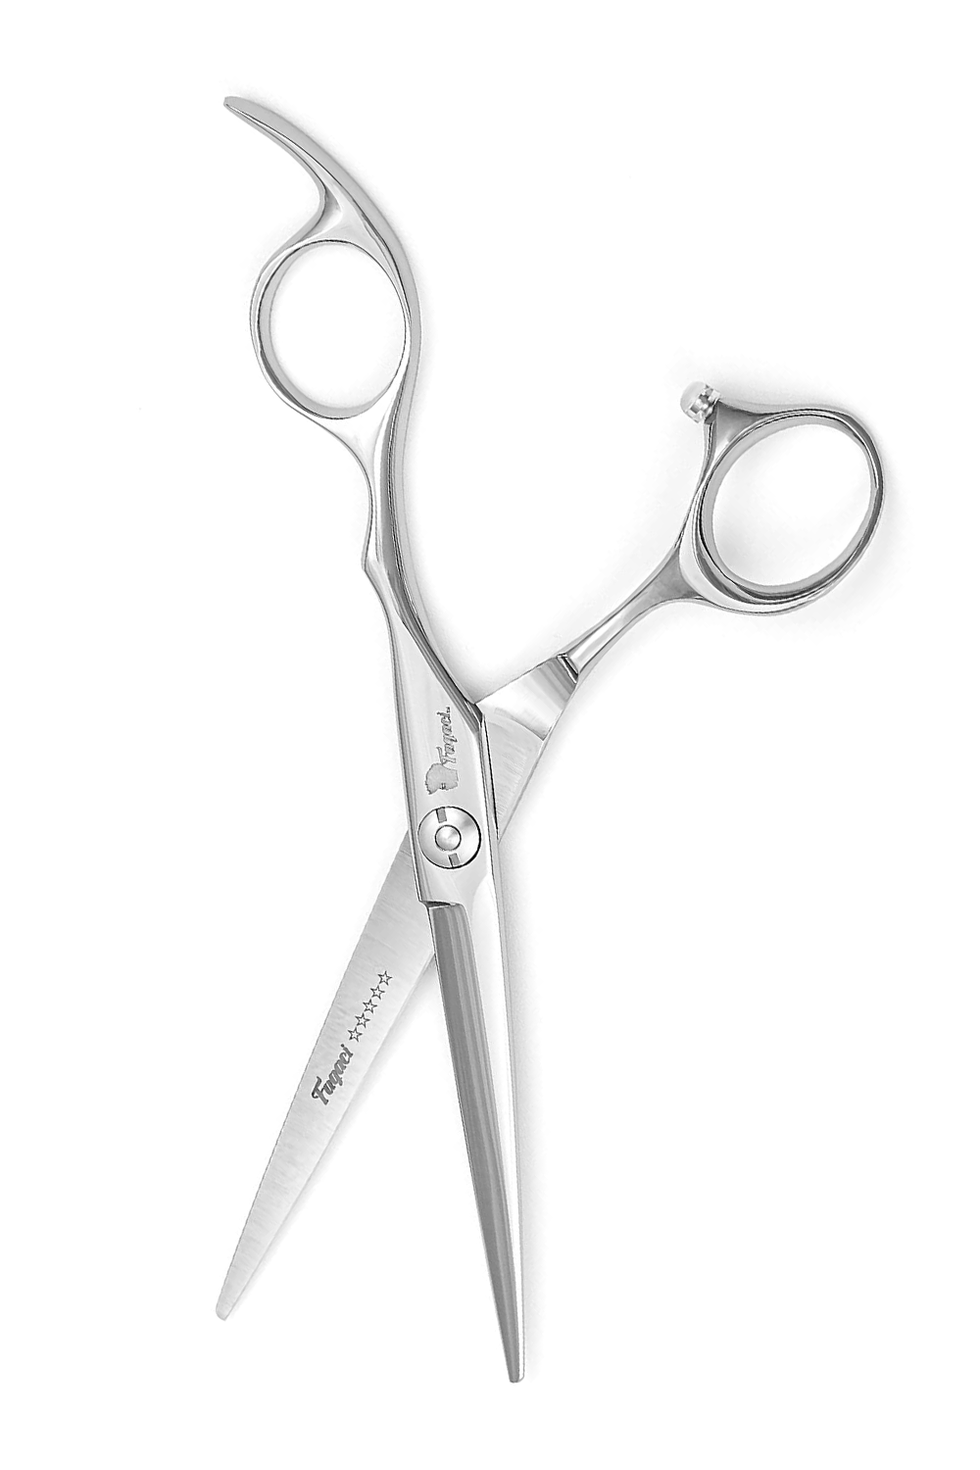 Fagaci Professional Hair Scissors 6 Inch